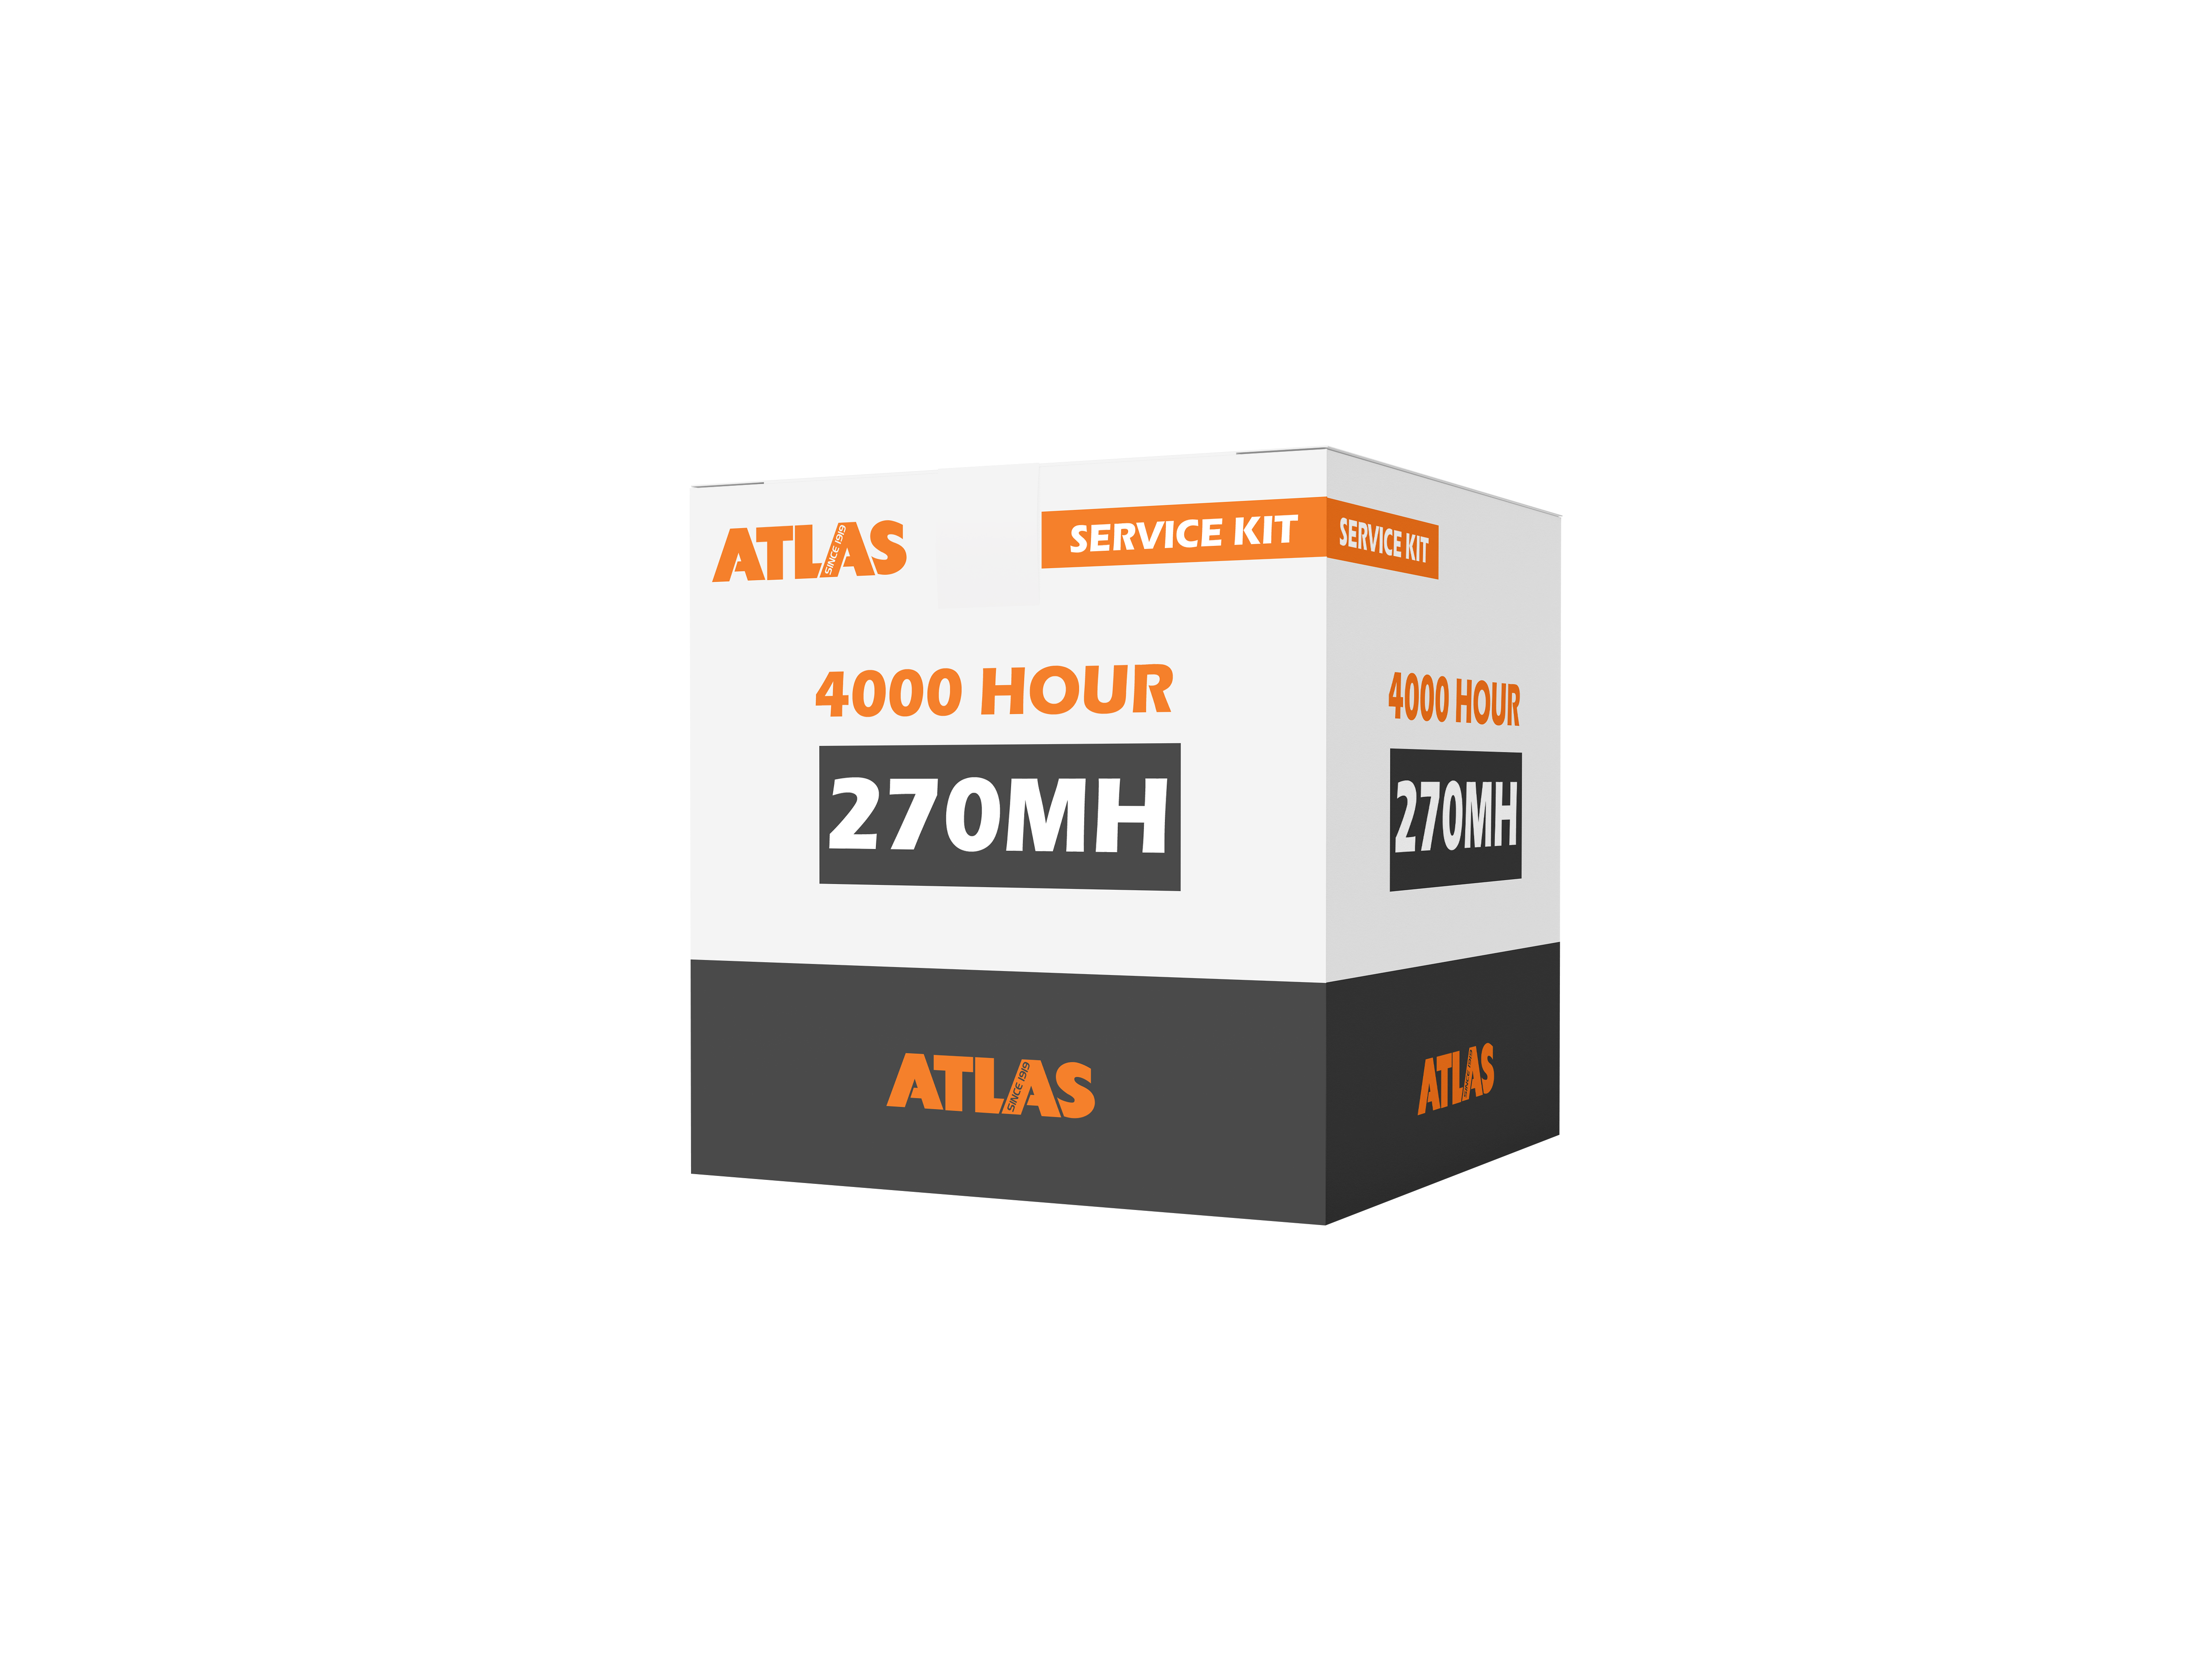 Atlas 270MH 4000 Hour Service Kit (Tier 4 I Engine)